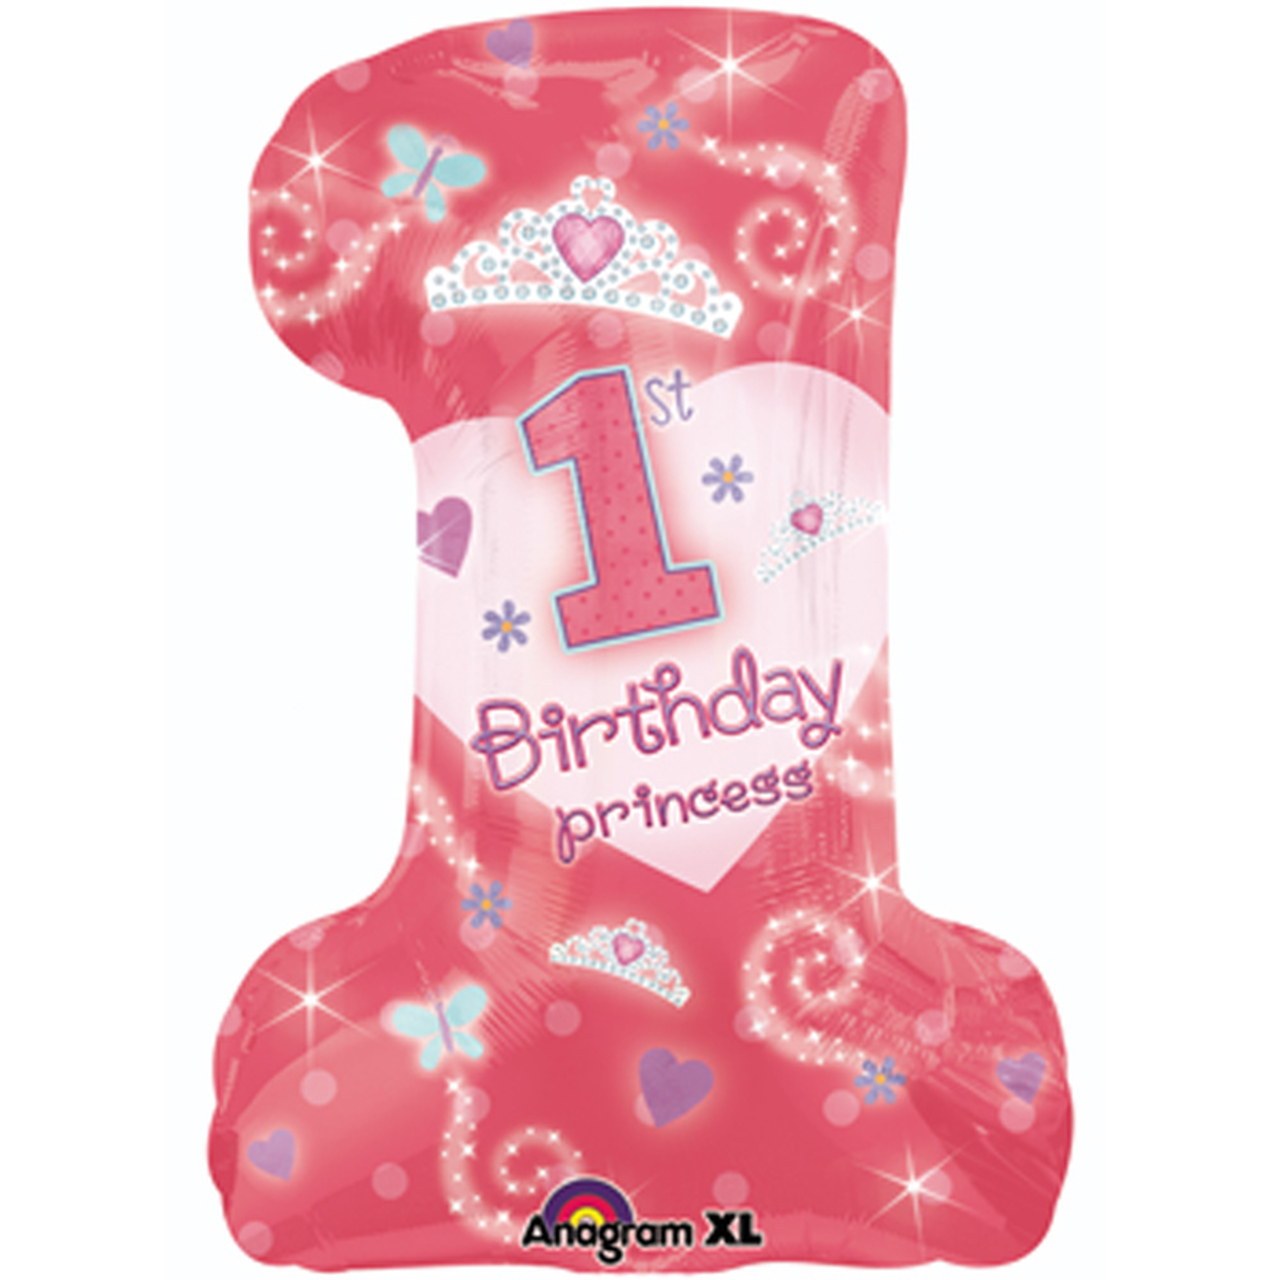 #1 ” Birthday Princess” shape balloon